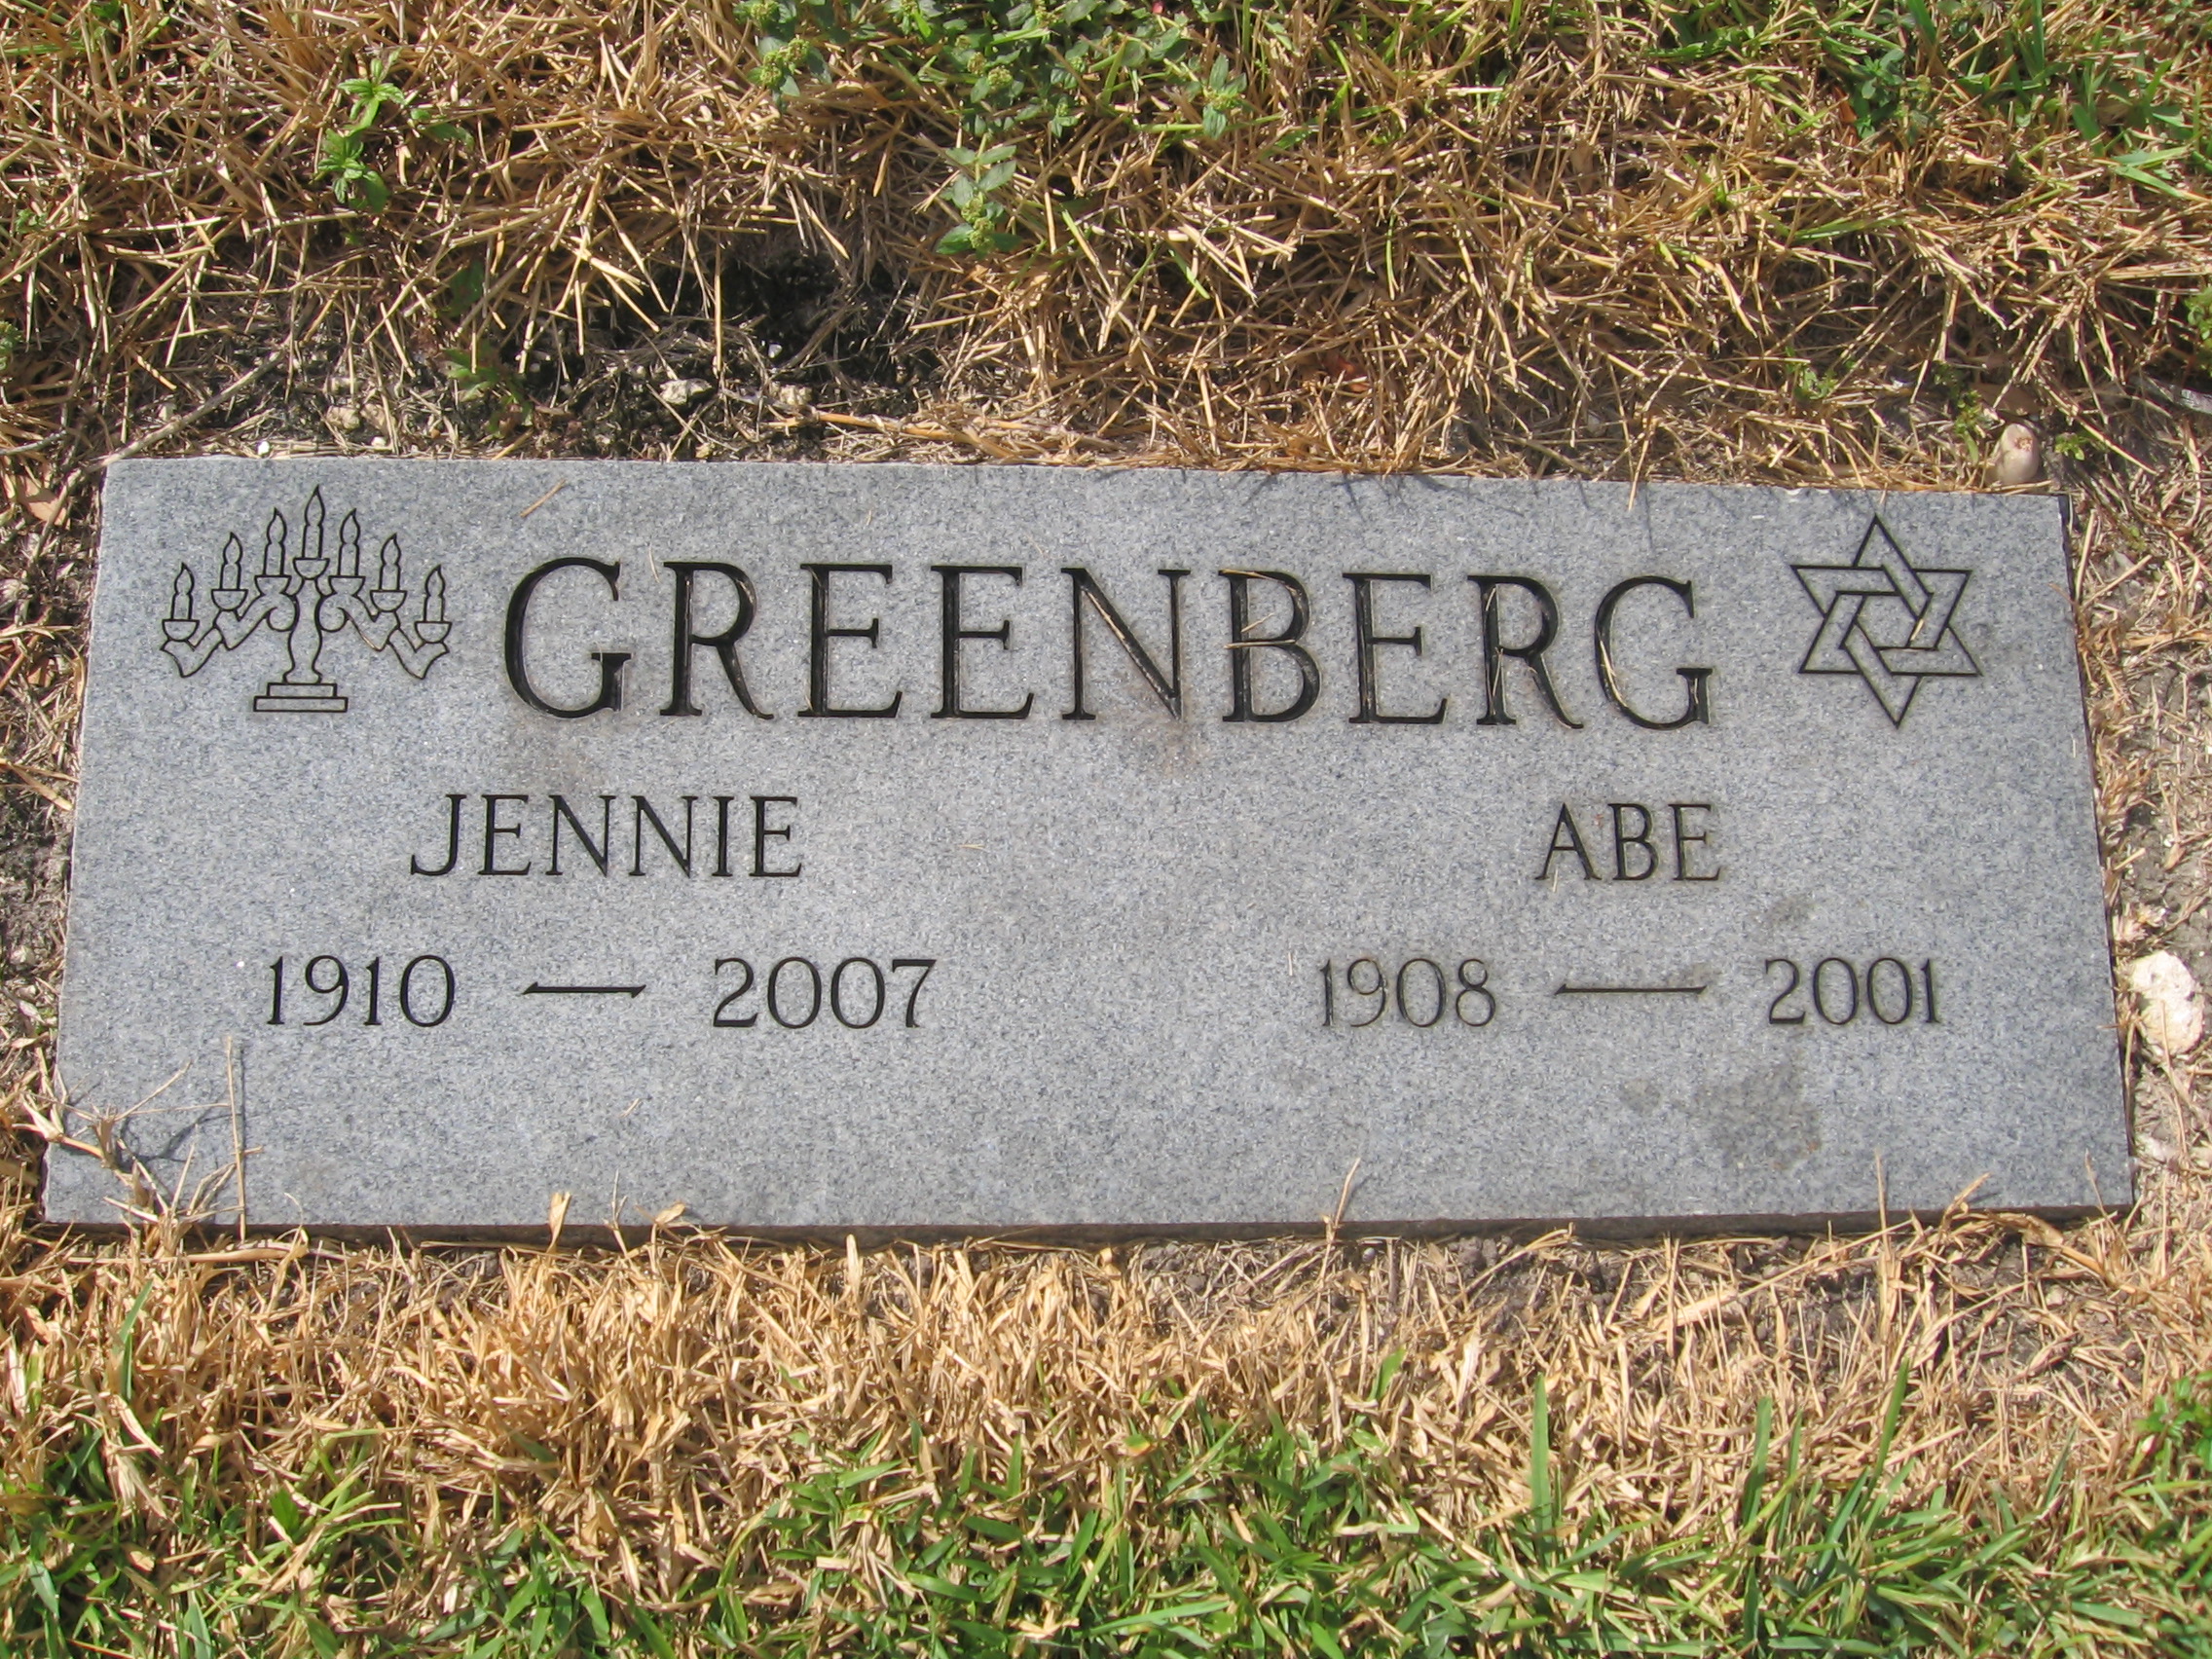 Jennie Greenberg